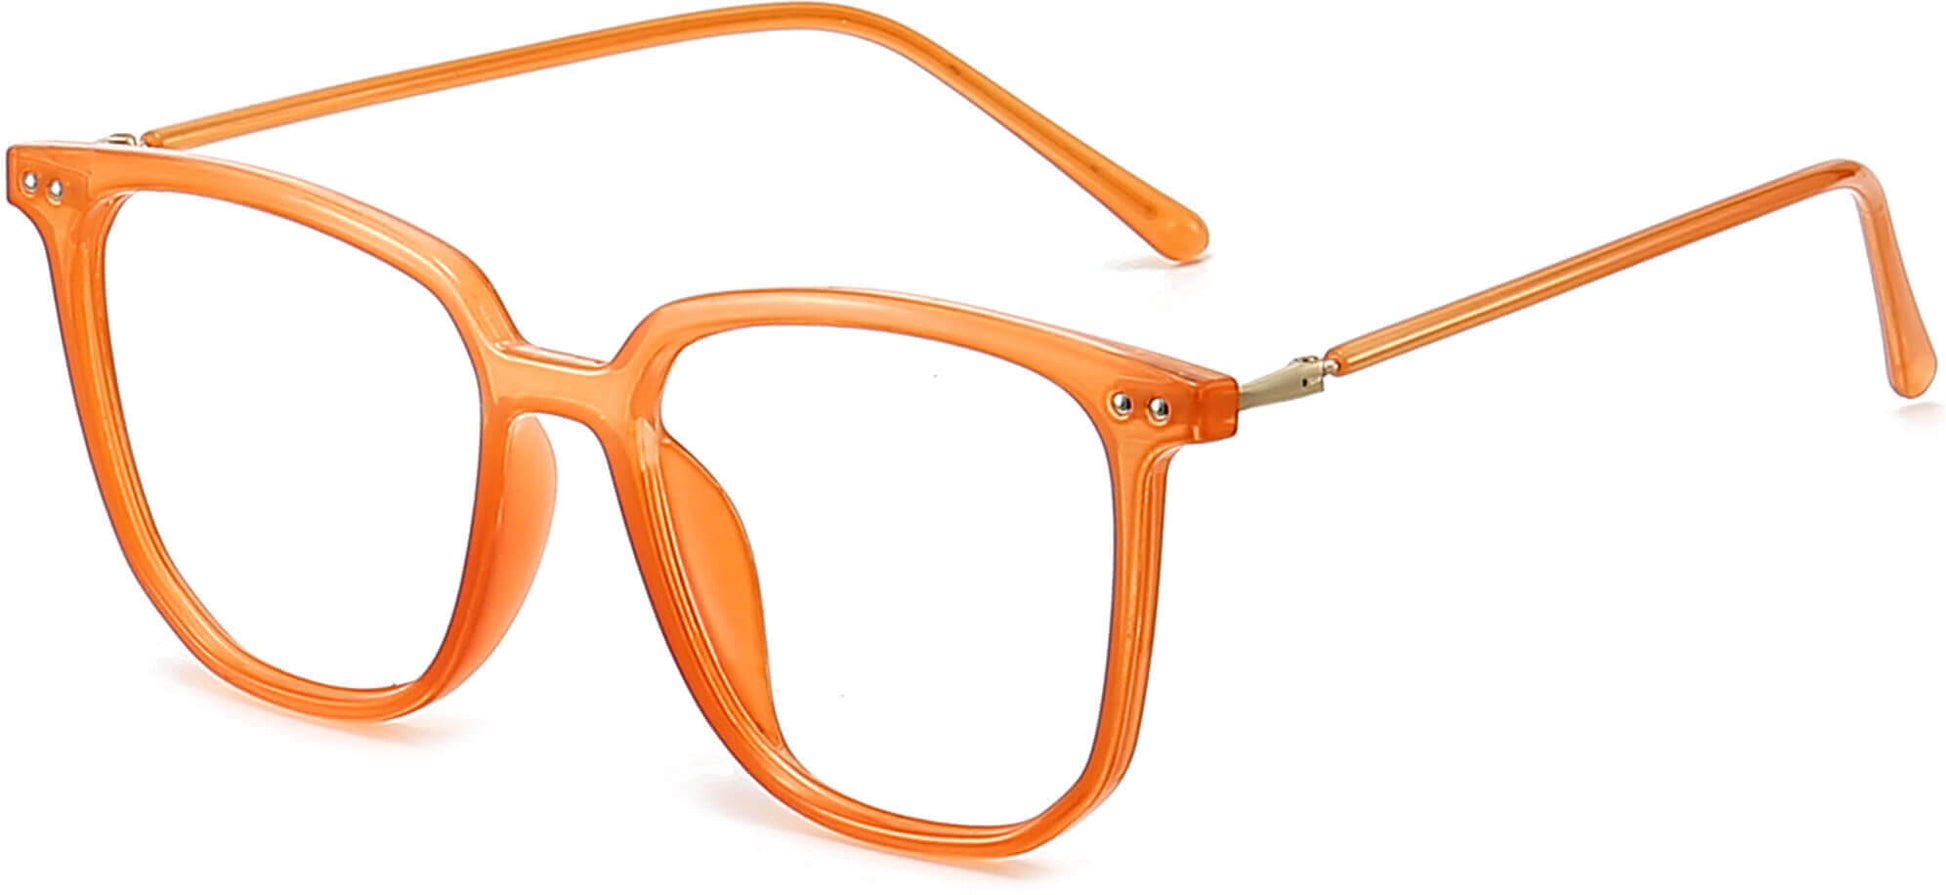 Makenna Geometric Orange Eyeglasses from ANRRI, angle view